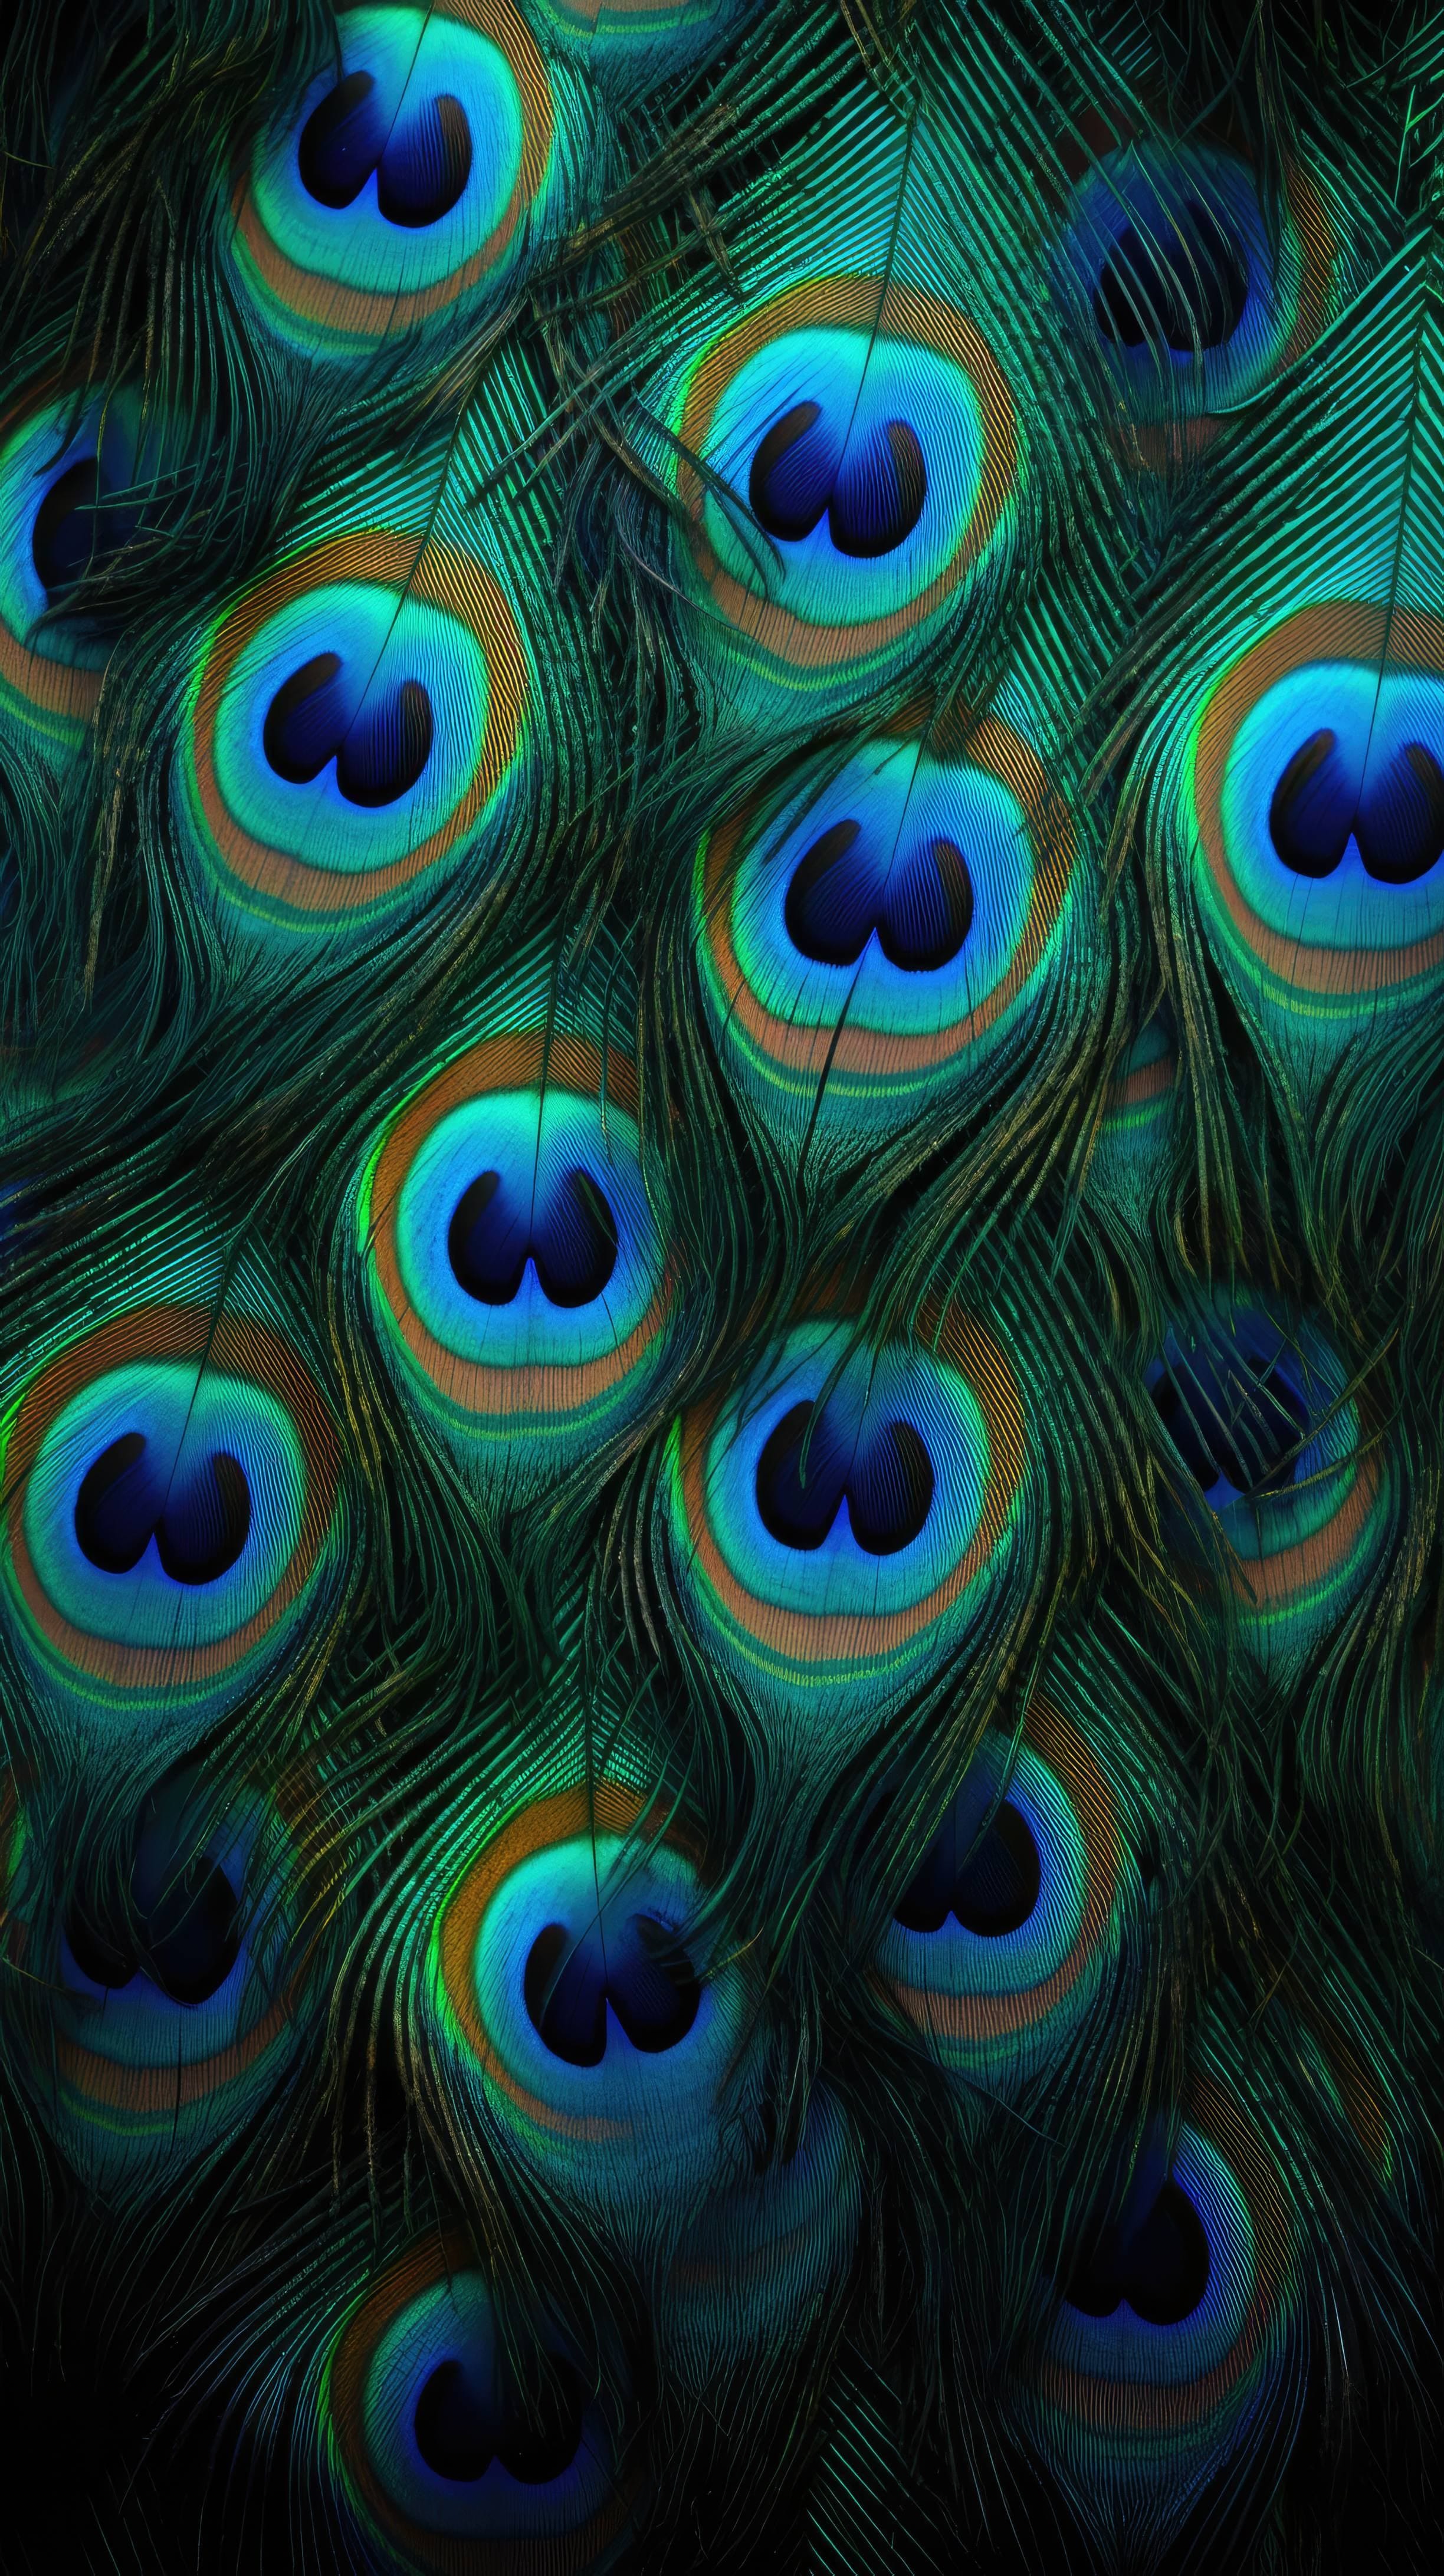 Free AI art image of peacock feathers